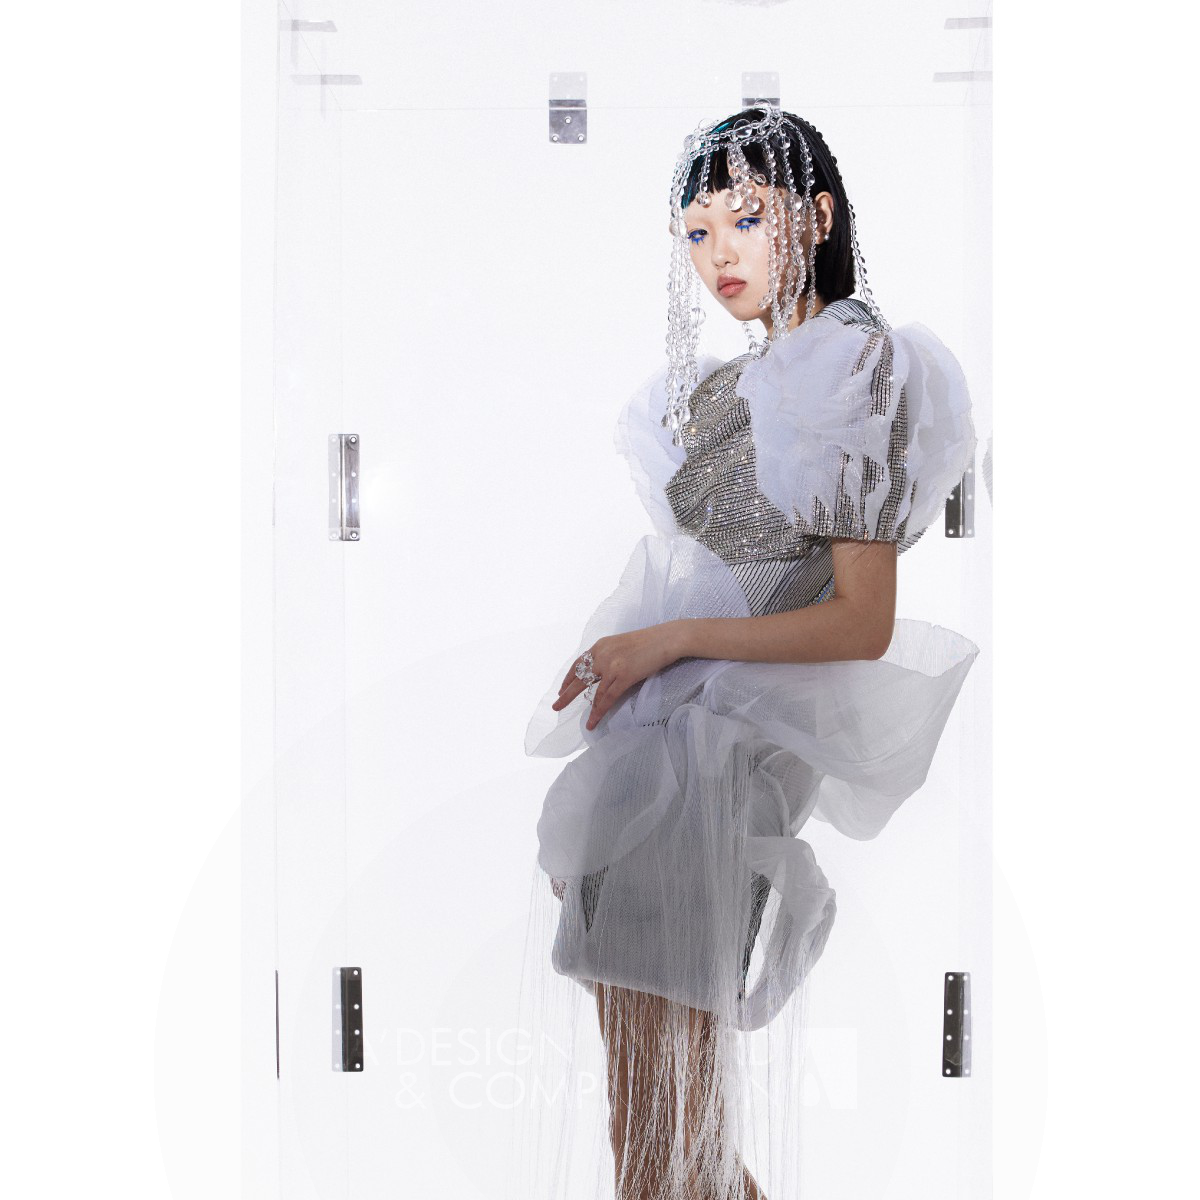 Light Surge Womenswear Collection by Chen Yang Iron Fashion, Apparel and Garment Design Award Winner 2024 